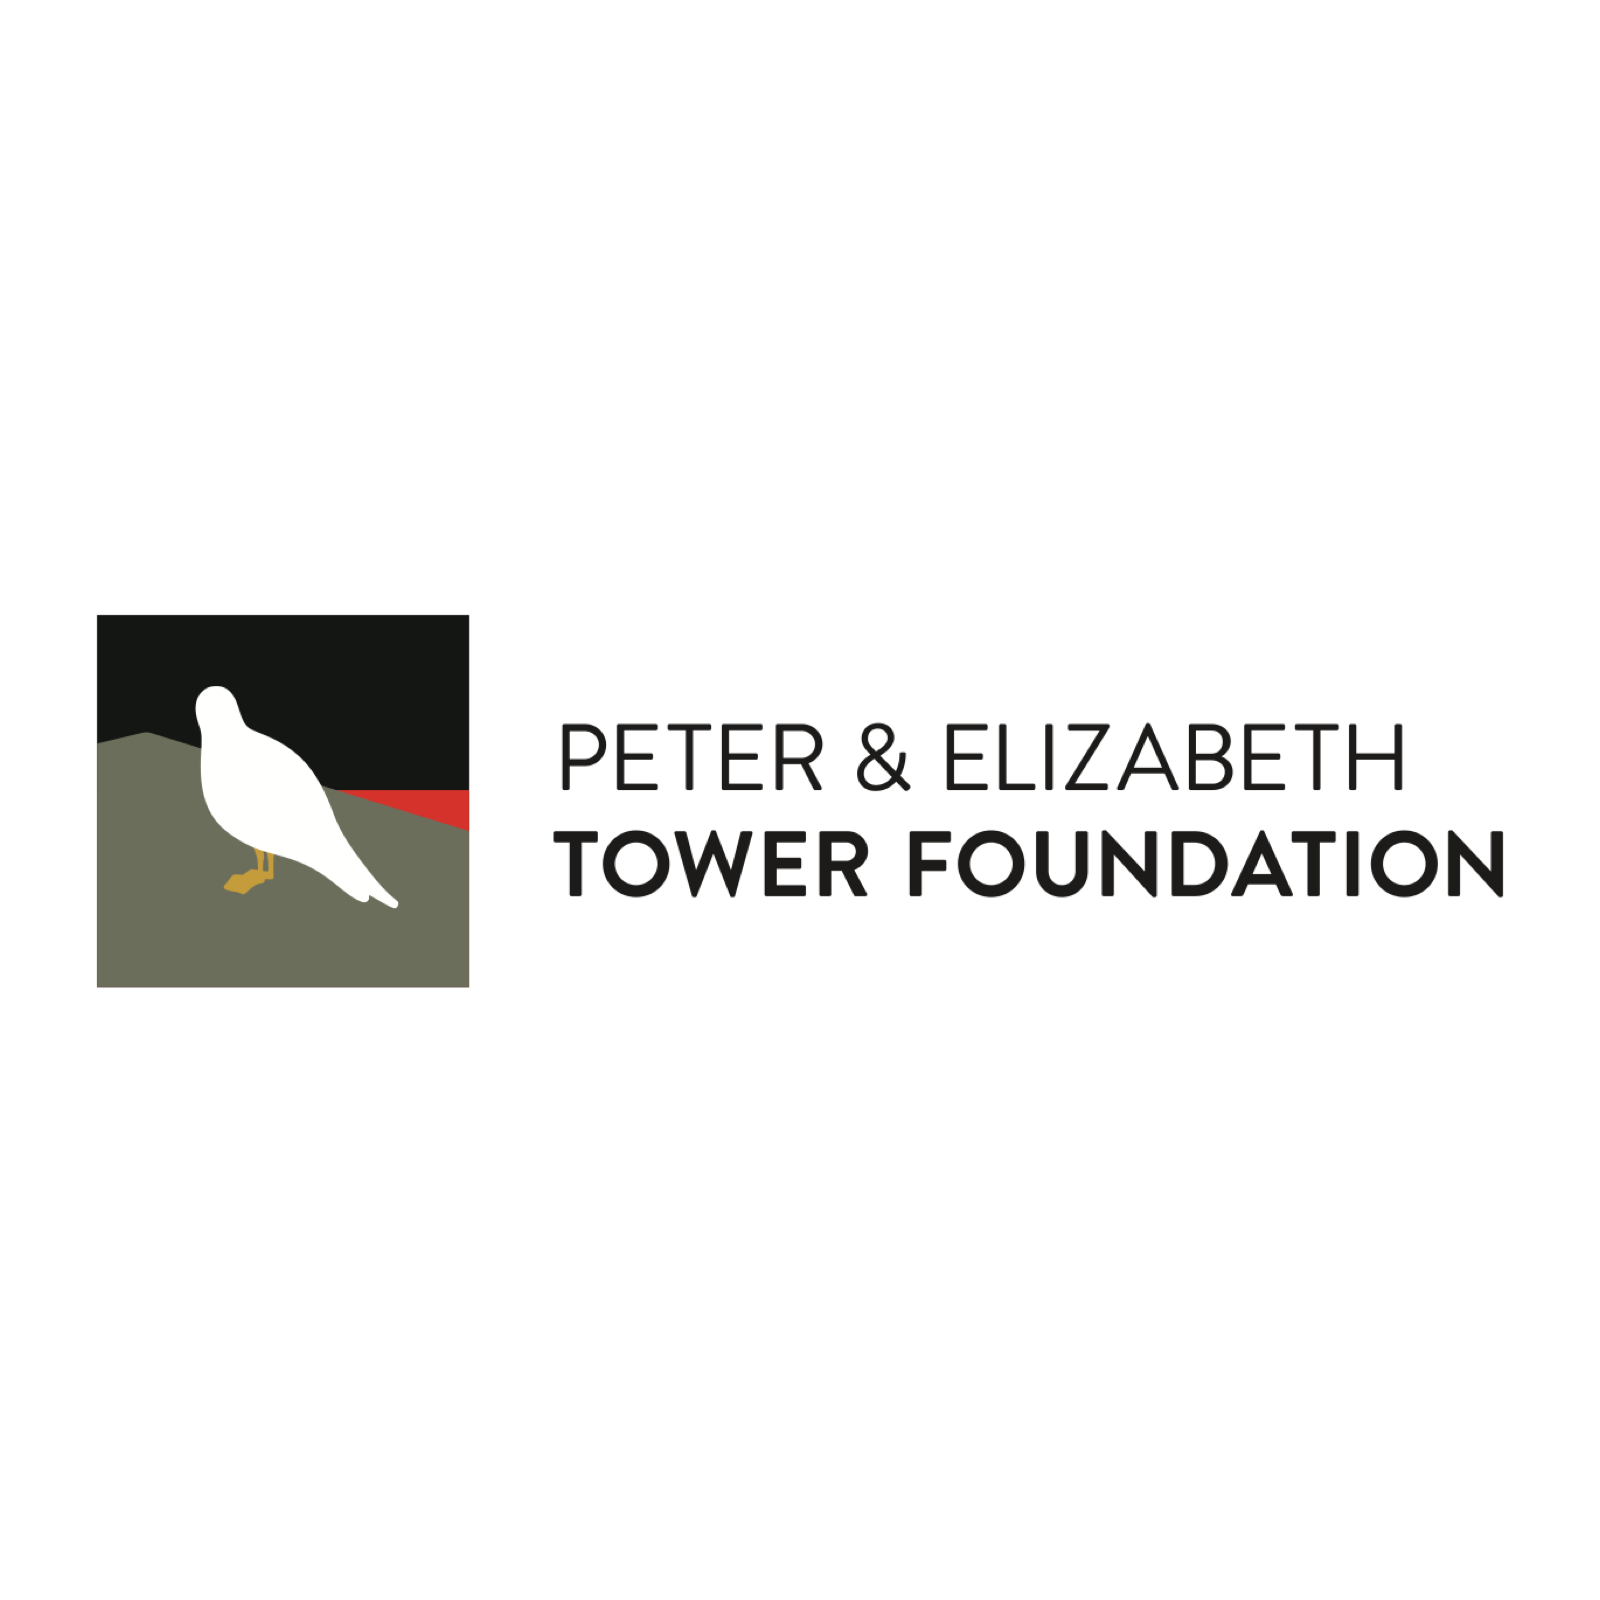 Peter and elizabeth tower foundation logo